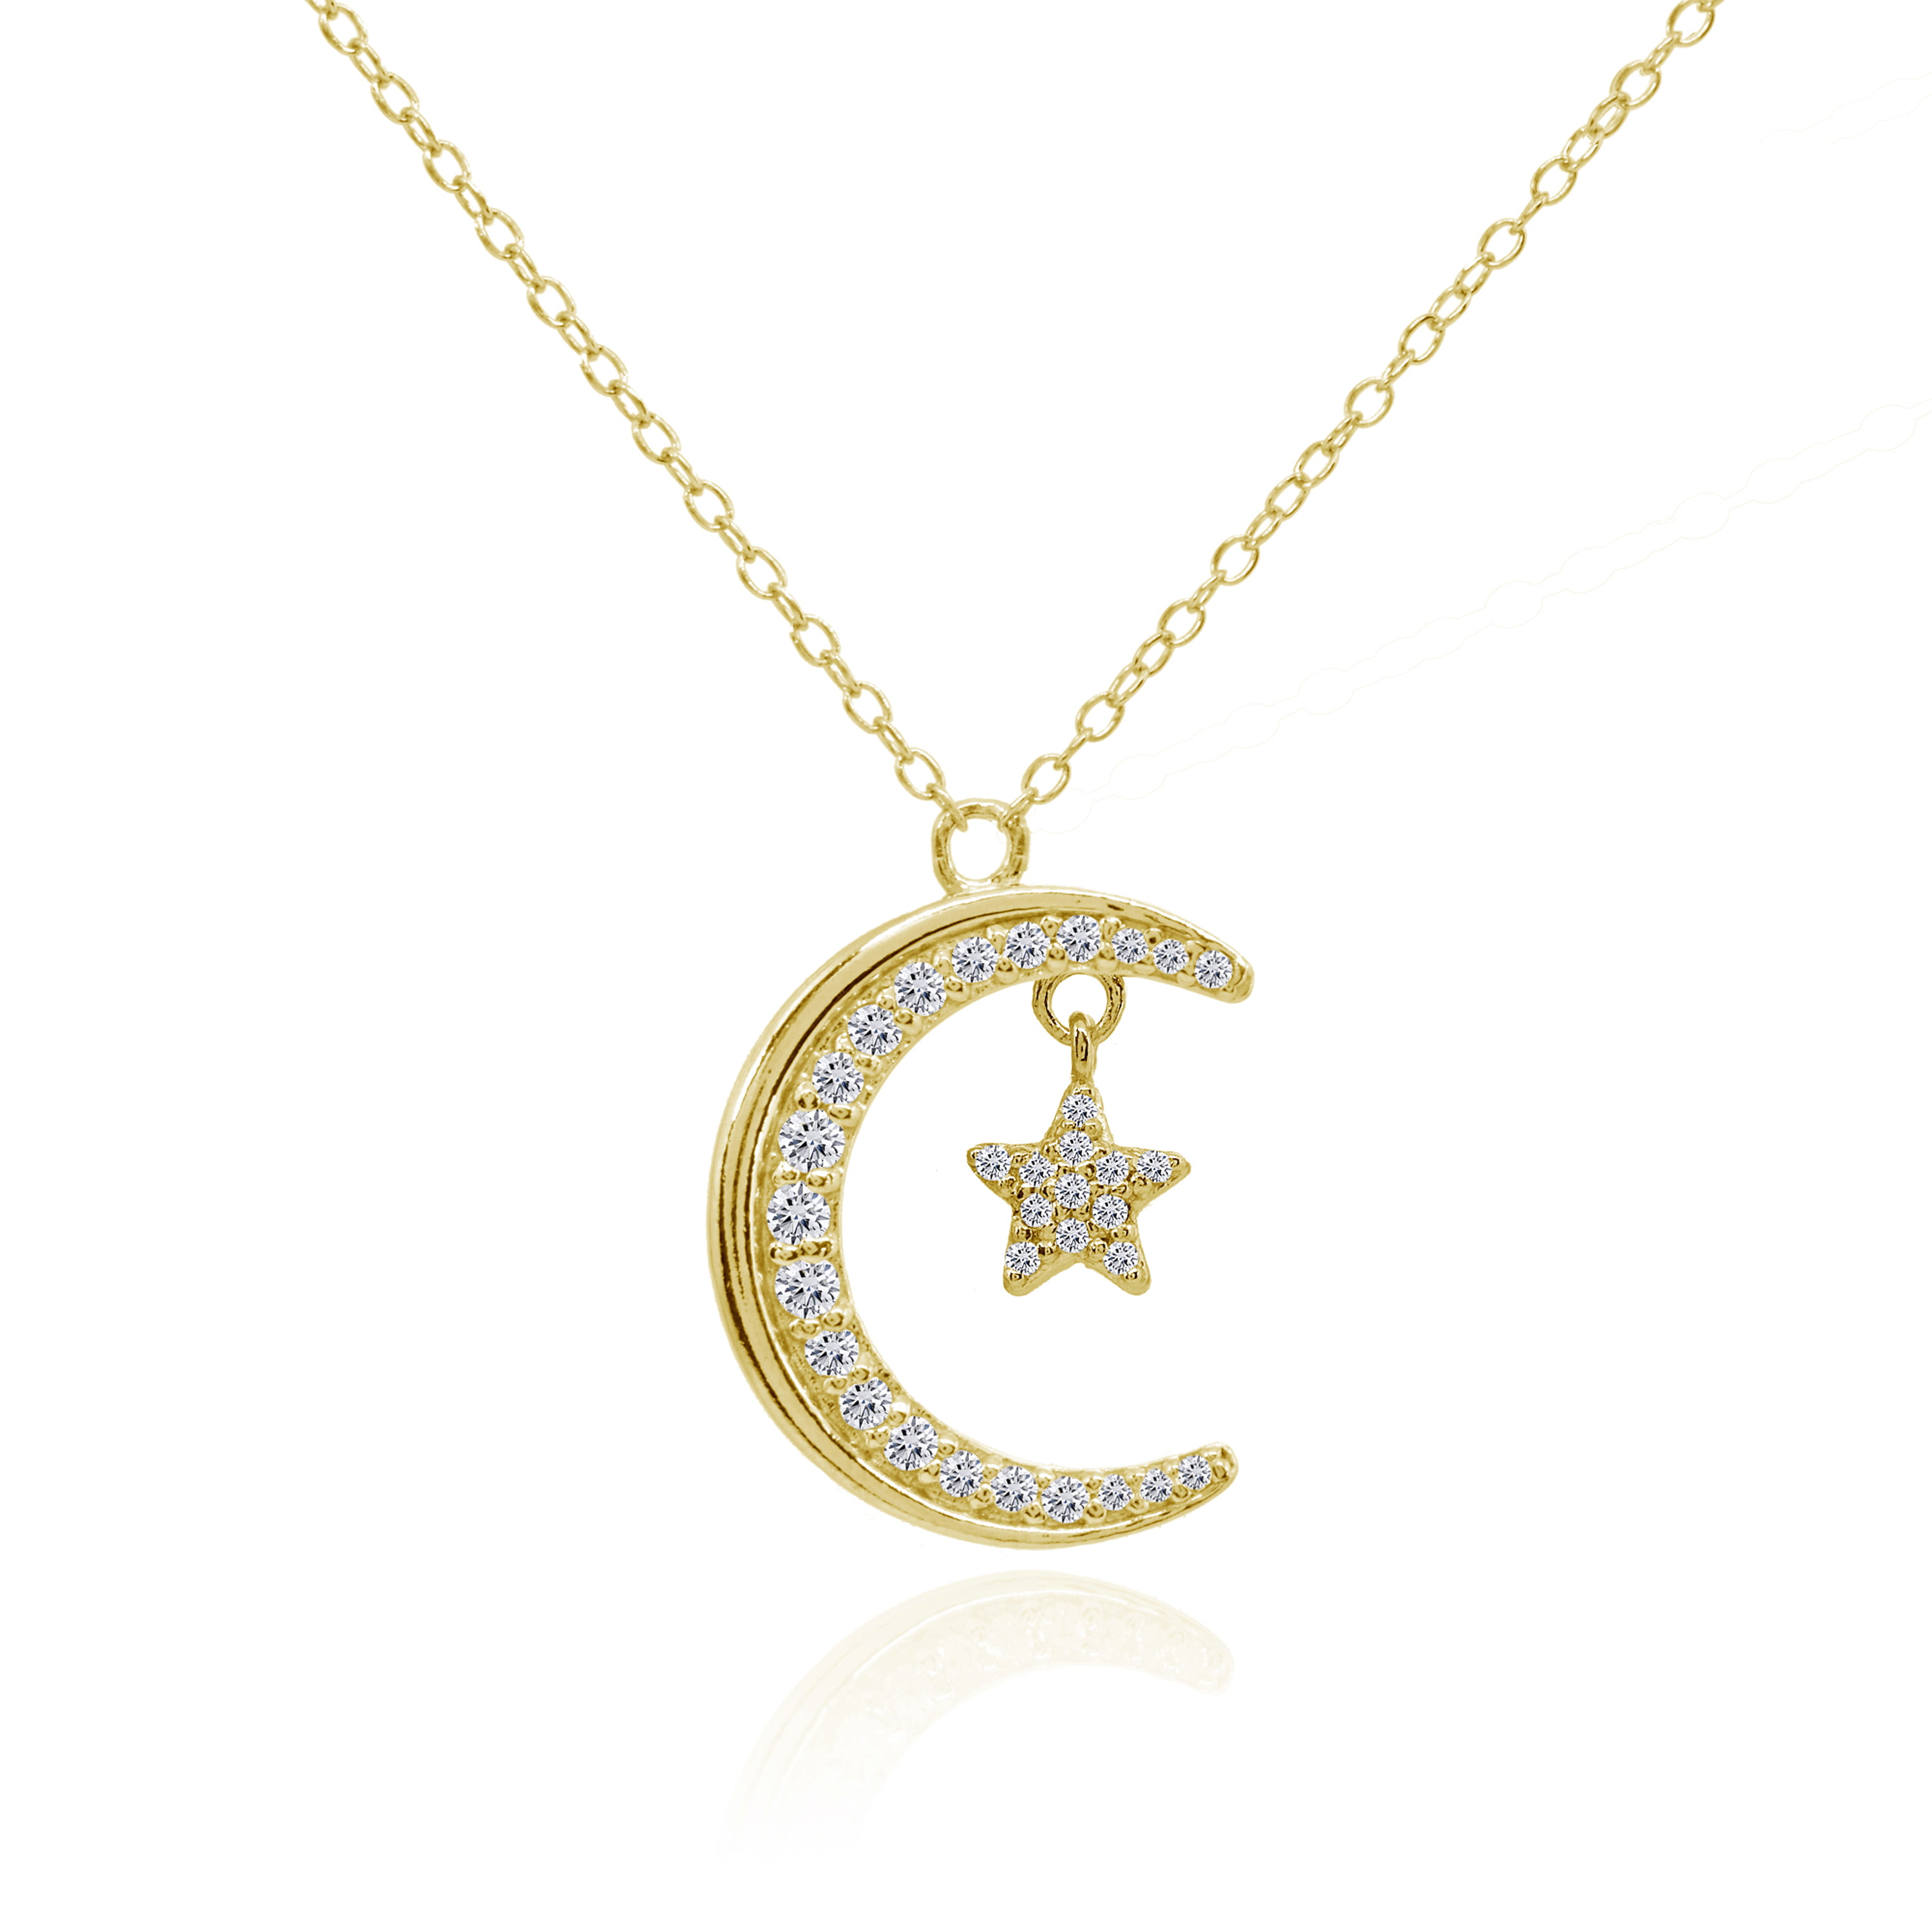 Luna Crescent Necklace CZ 18K Gold Plated